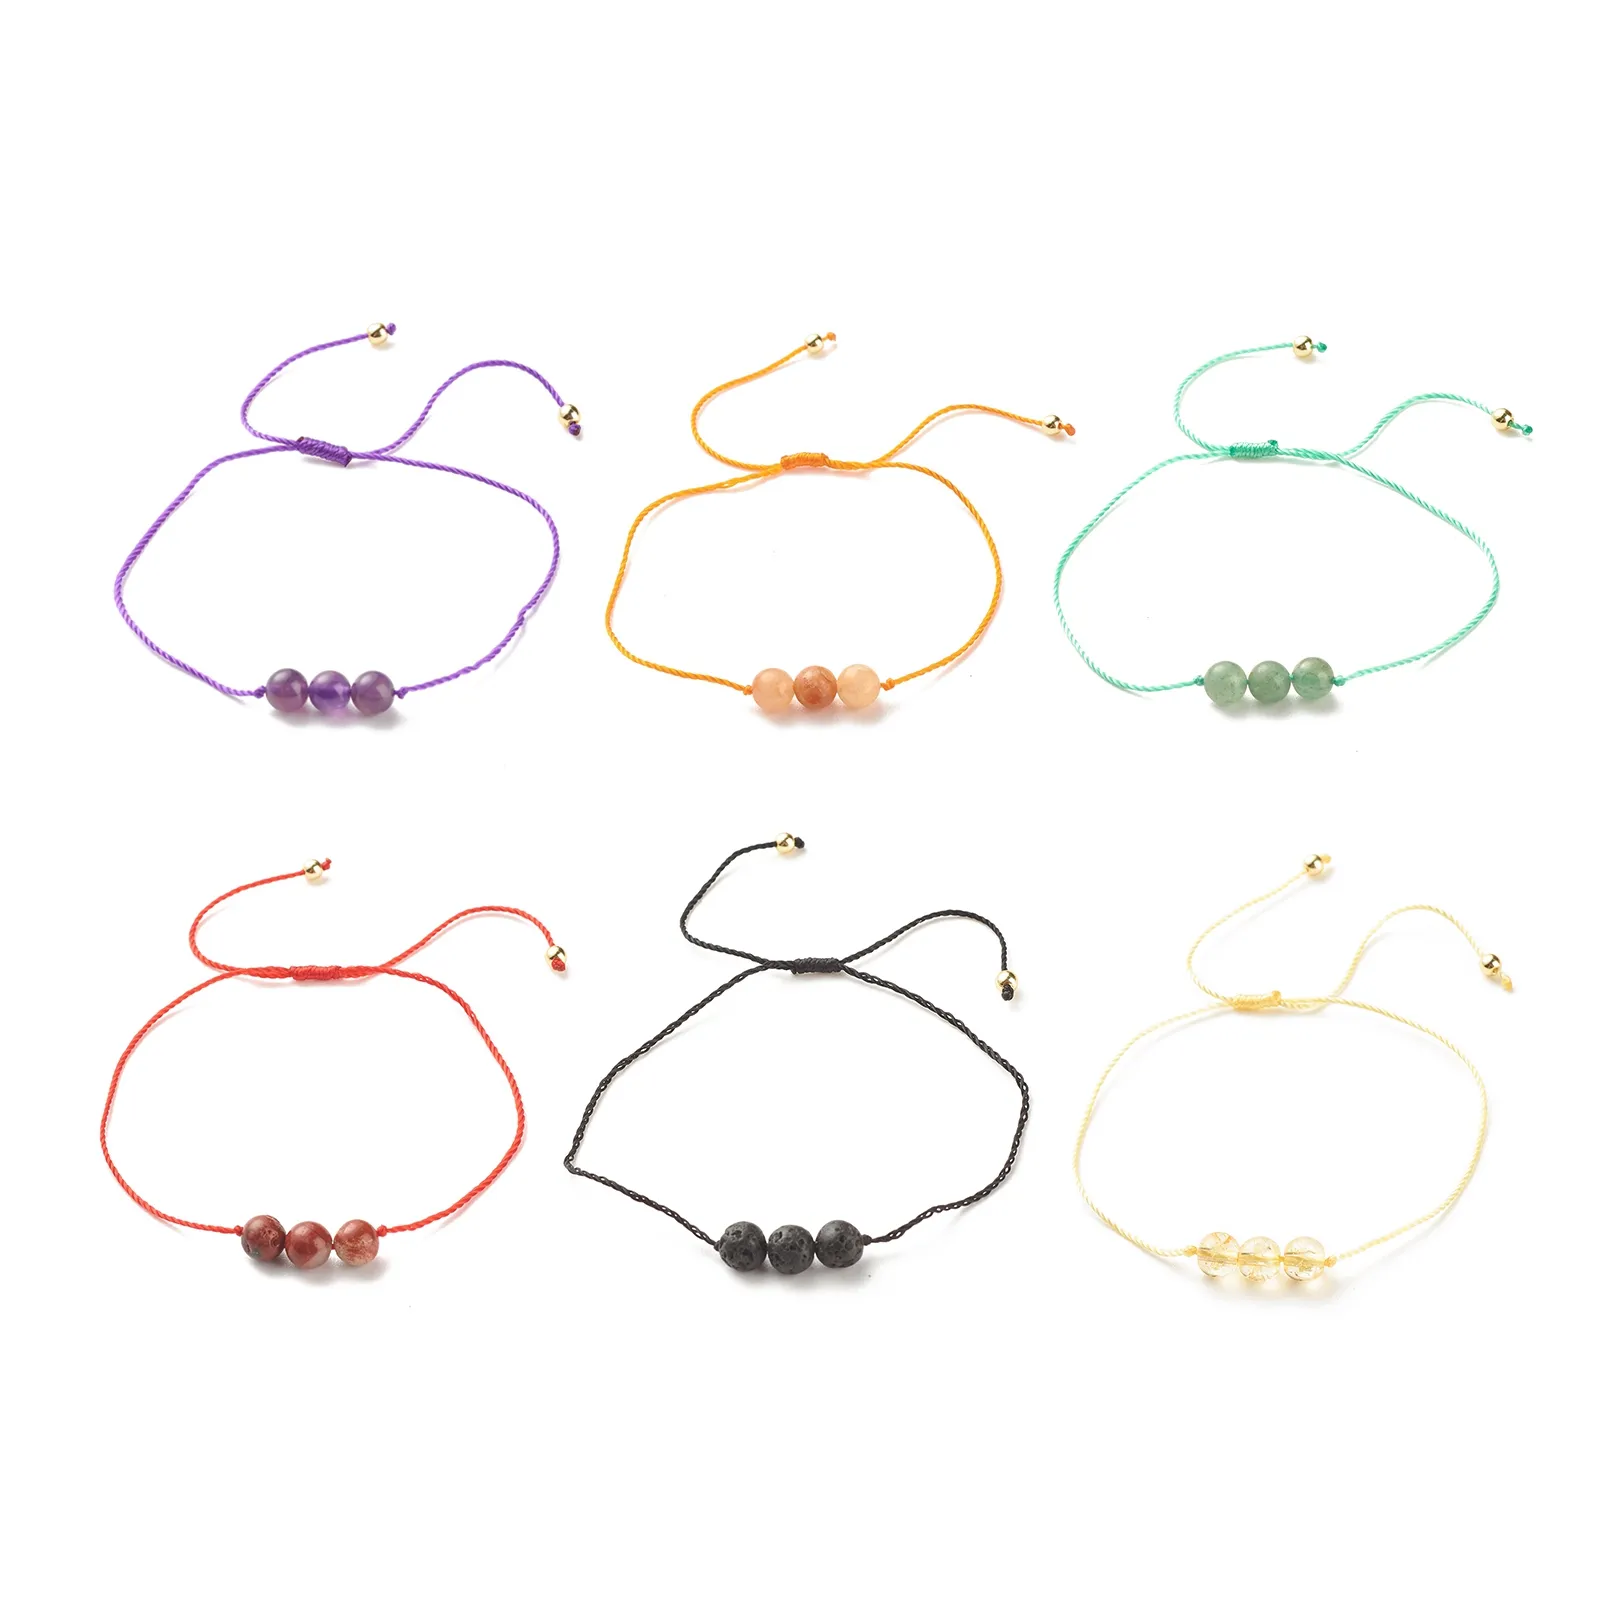 Pandahall Pandahall 6pcs 6 Style Natural & Synthetic Gemstone Round Beads Cord Bracelet